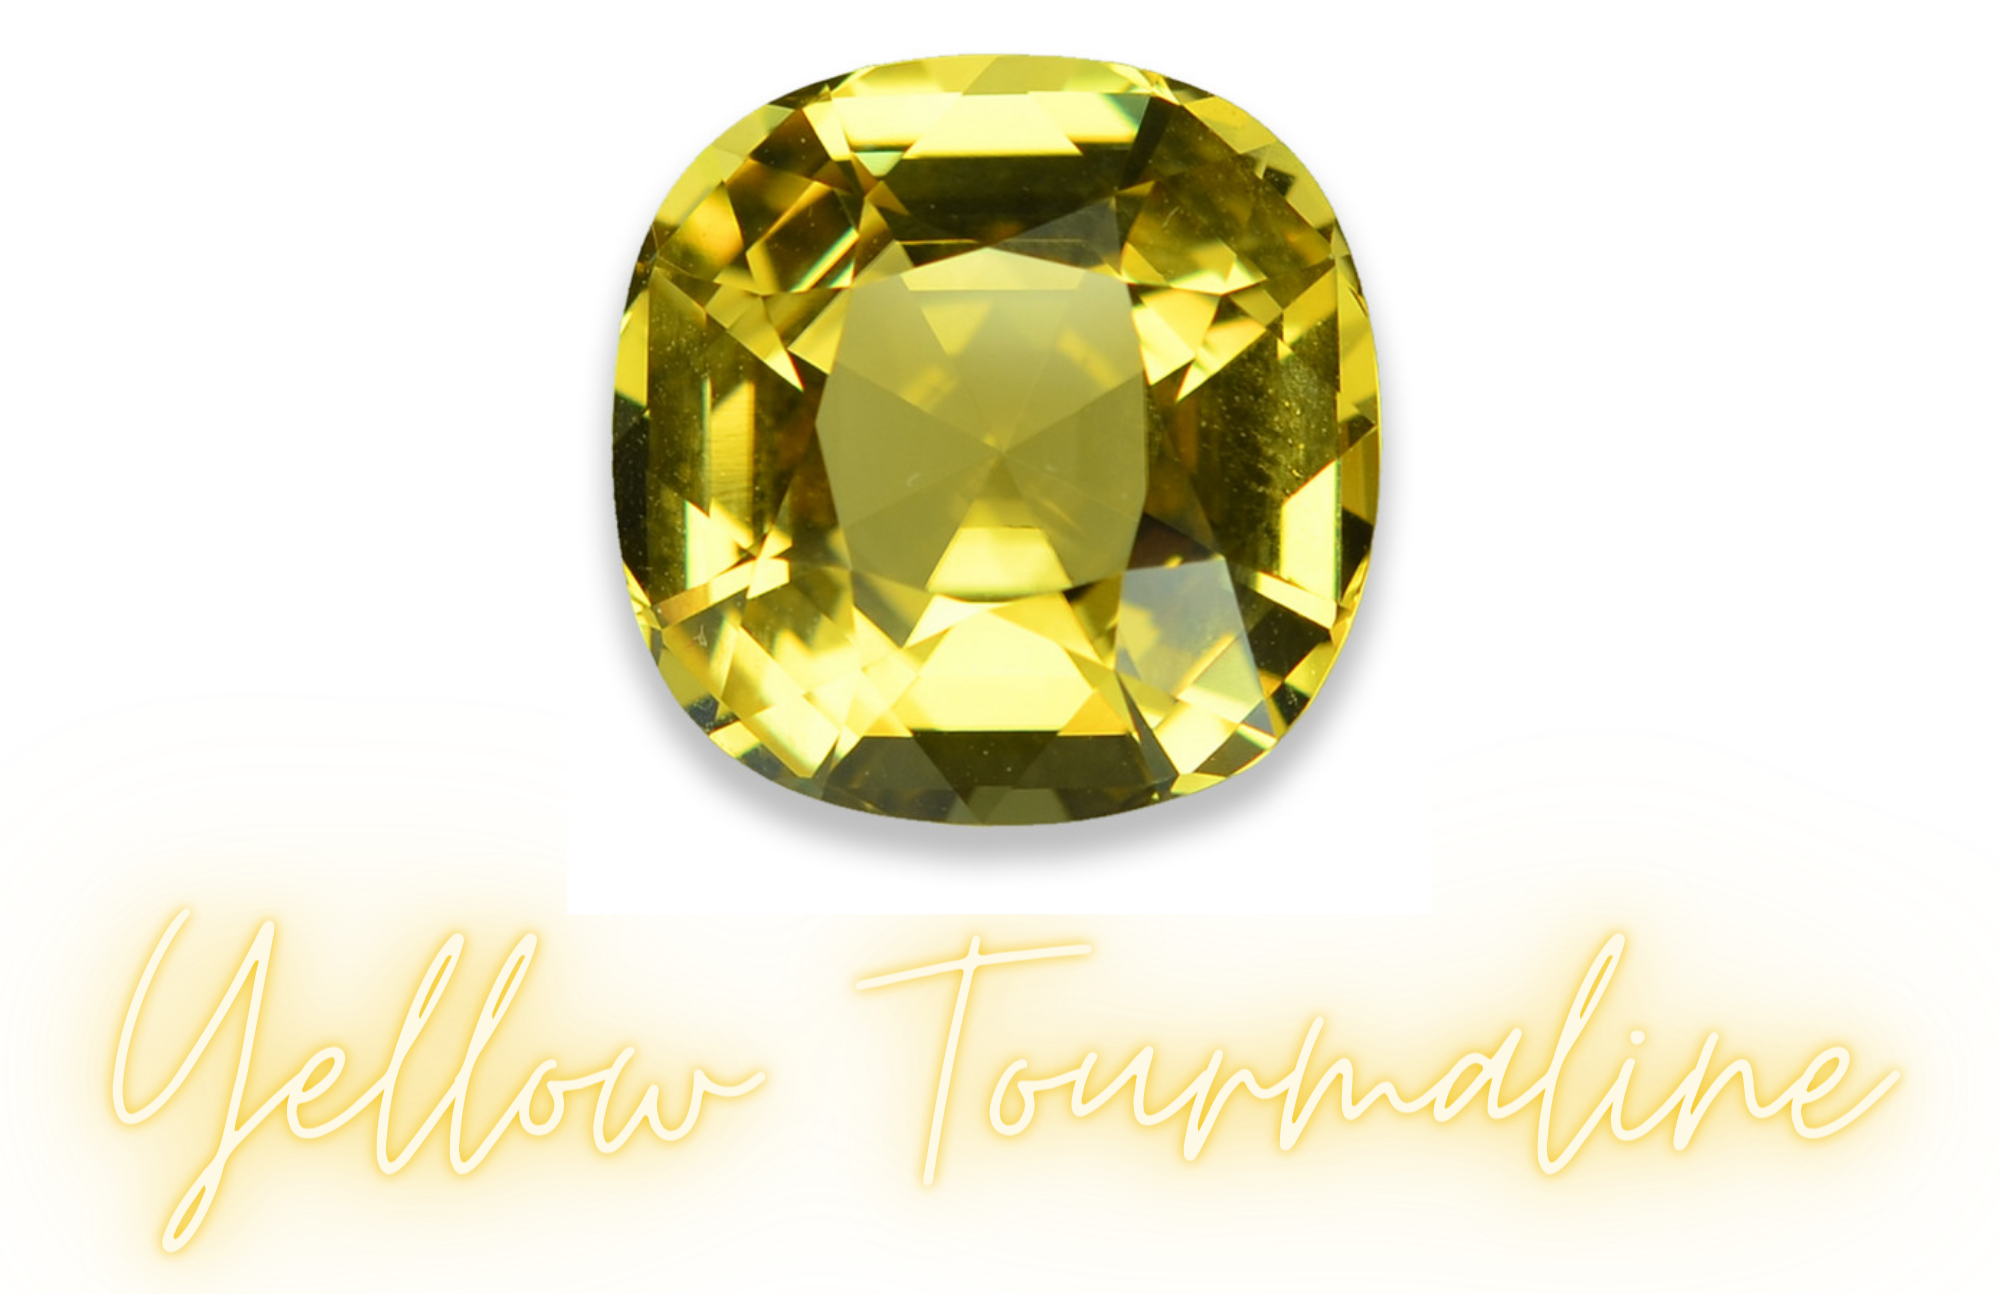 Yellow tourmaline stone with smooth corners